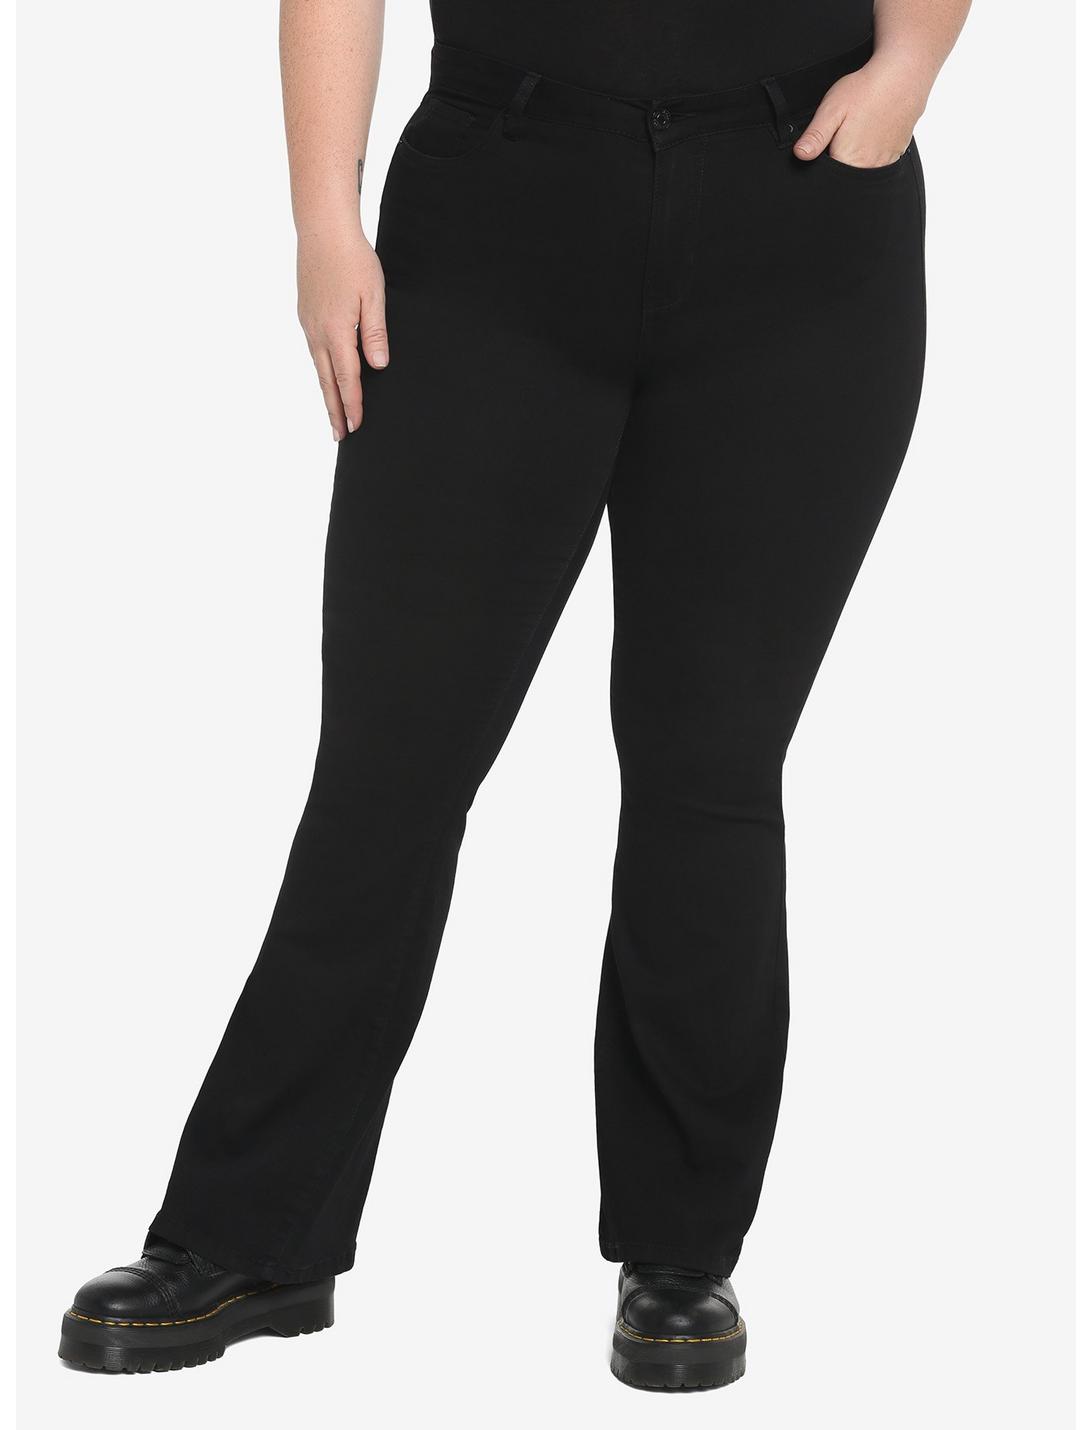 Black Stretch Flare Jeans Plus Size, BLACK, hi-res